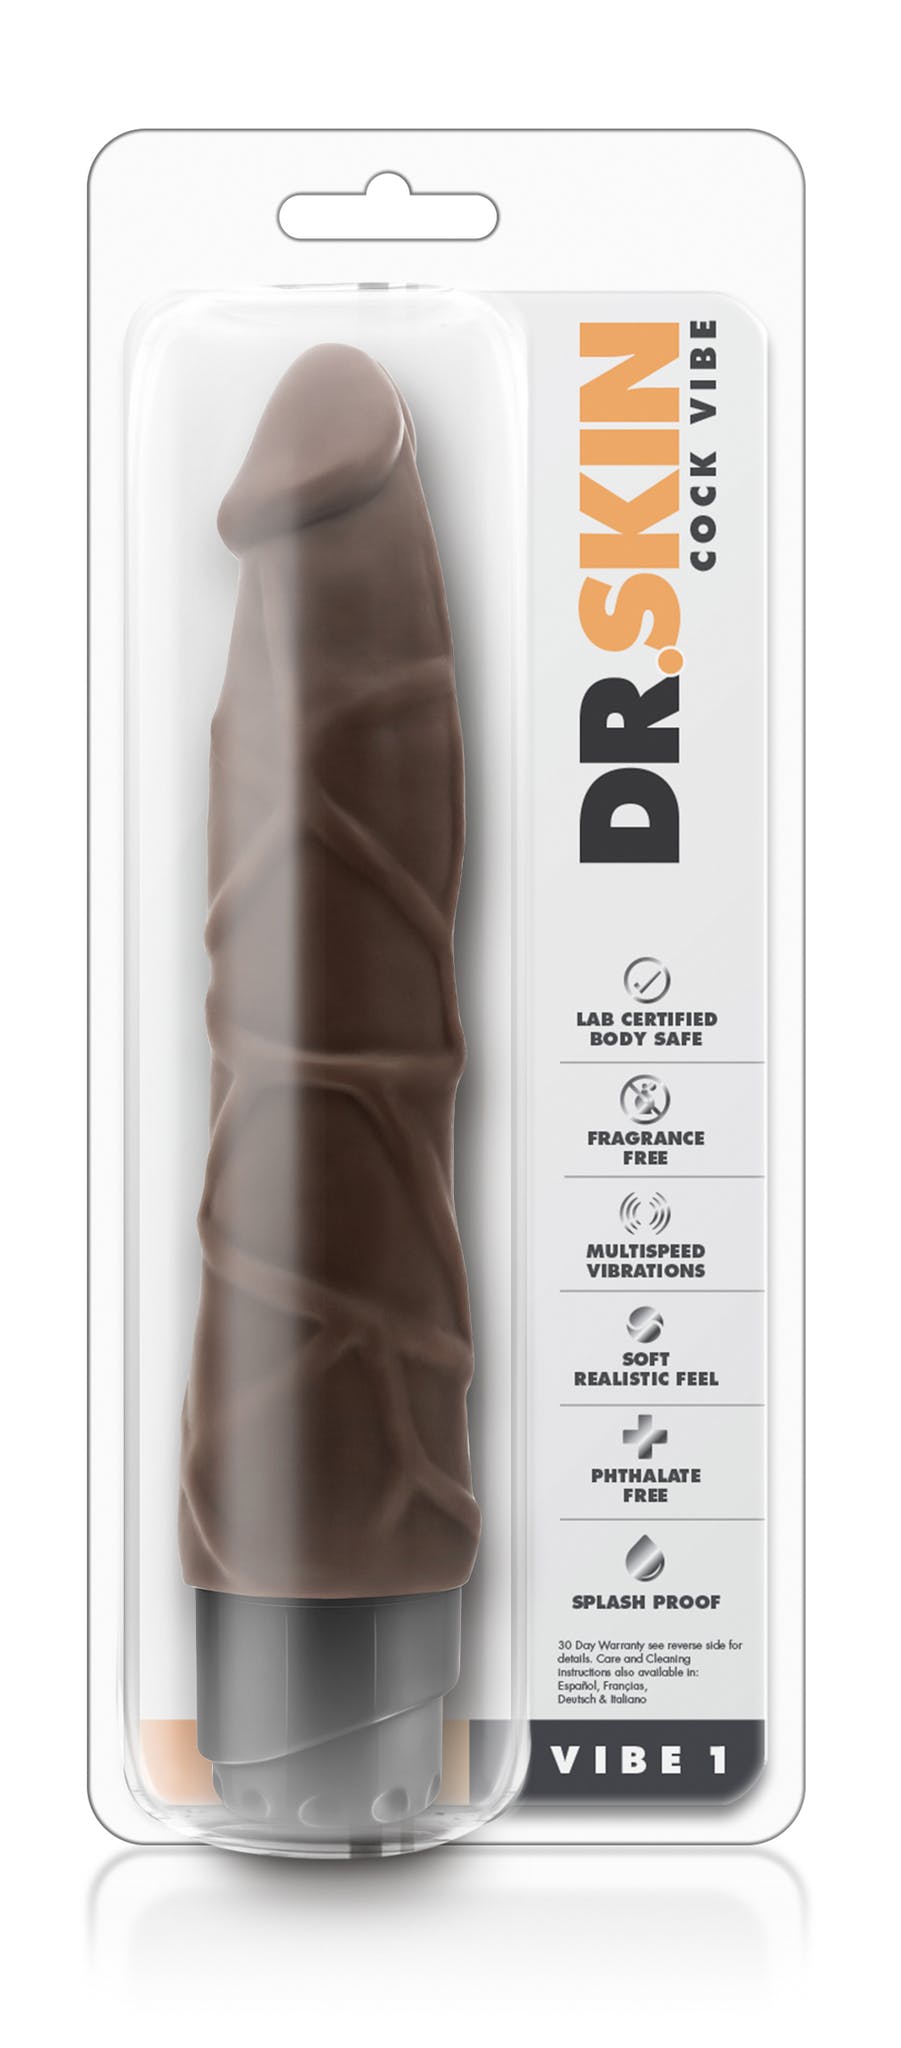 Dr. Skin - Vibe 1, Chocolate